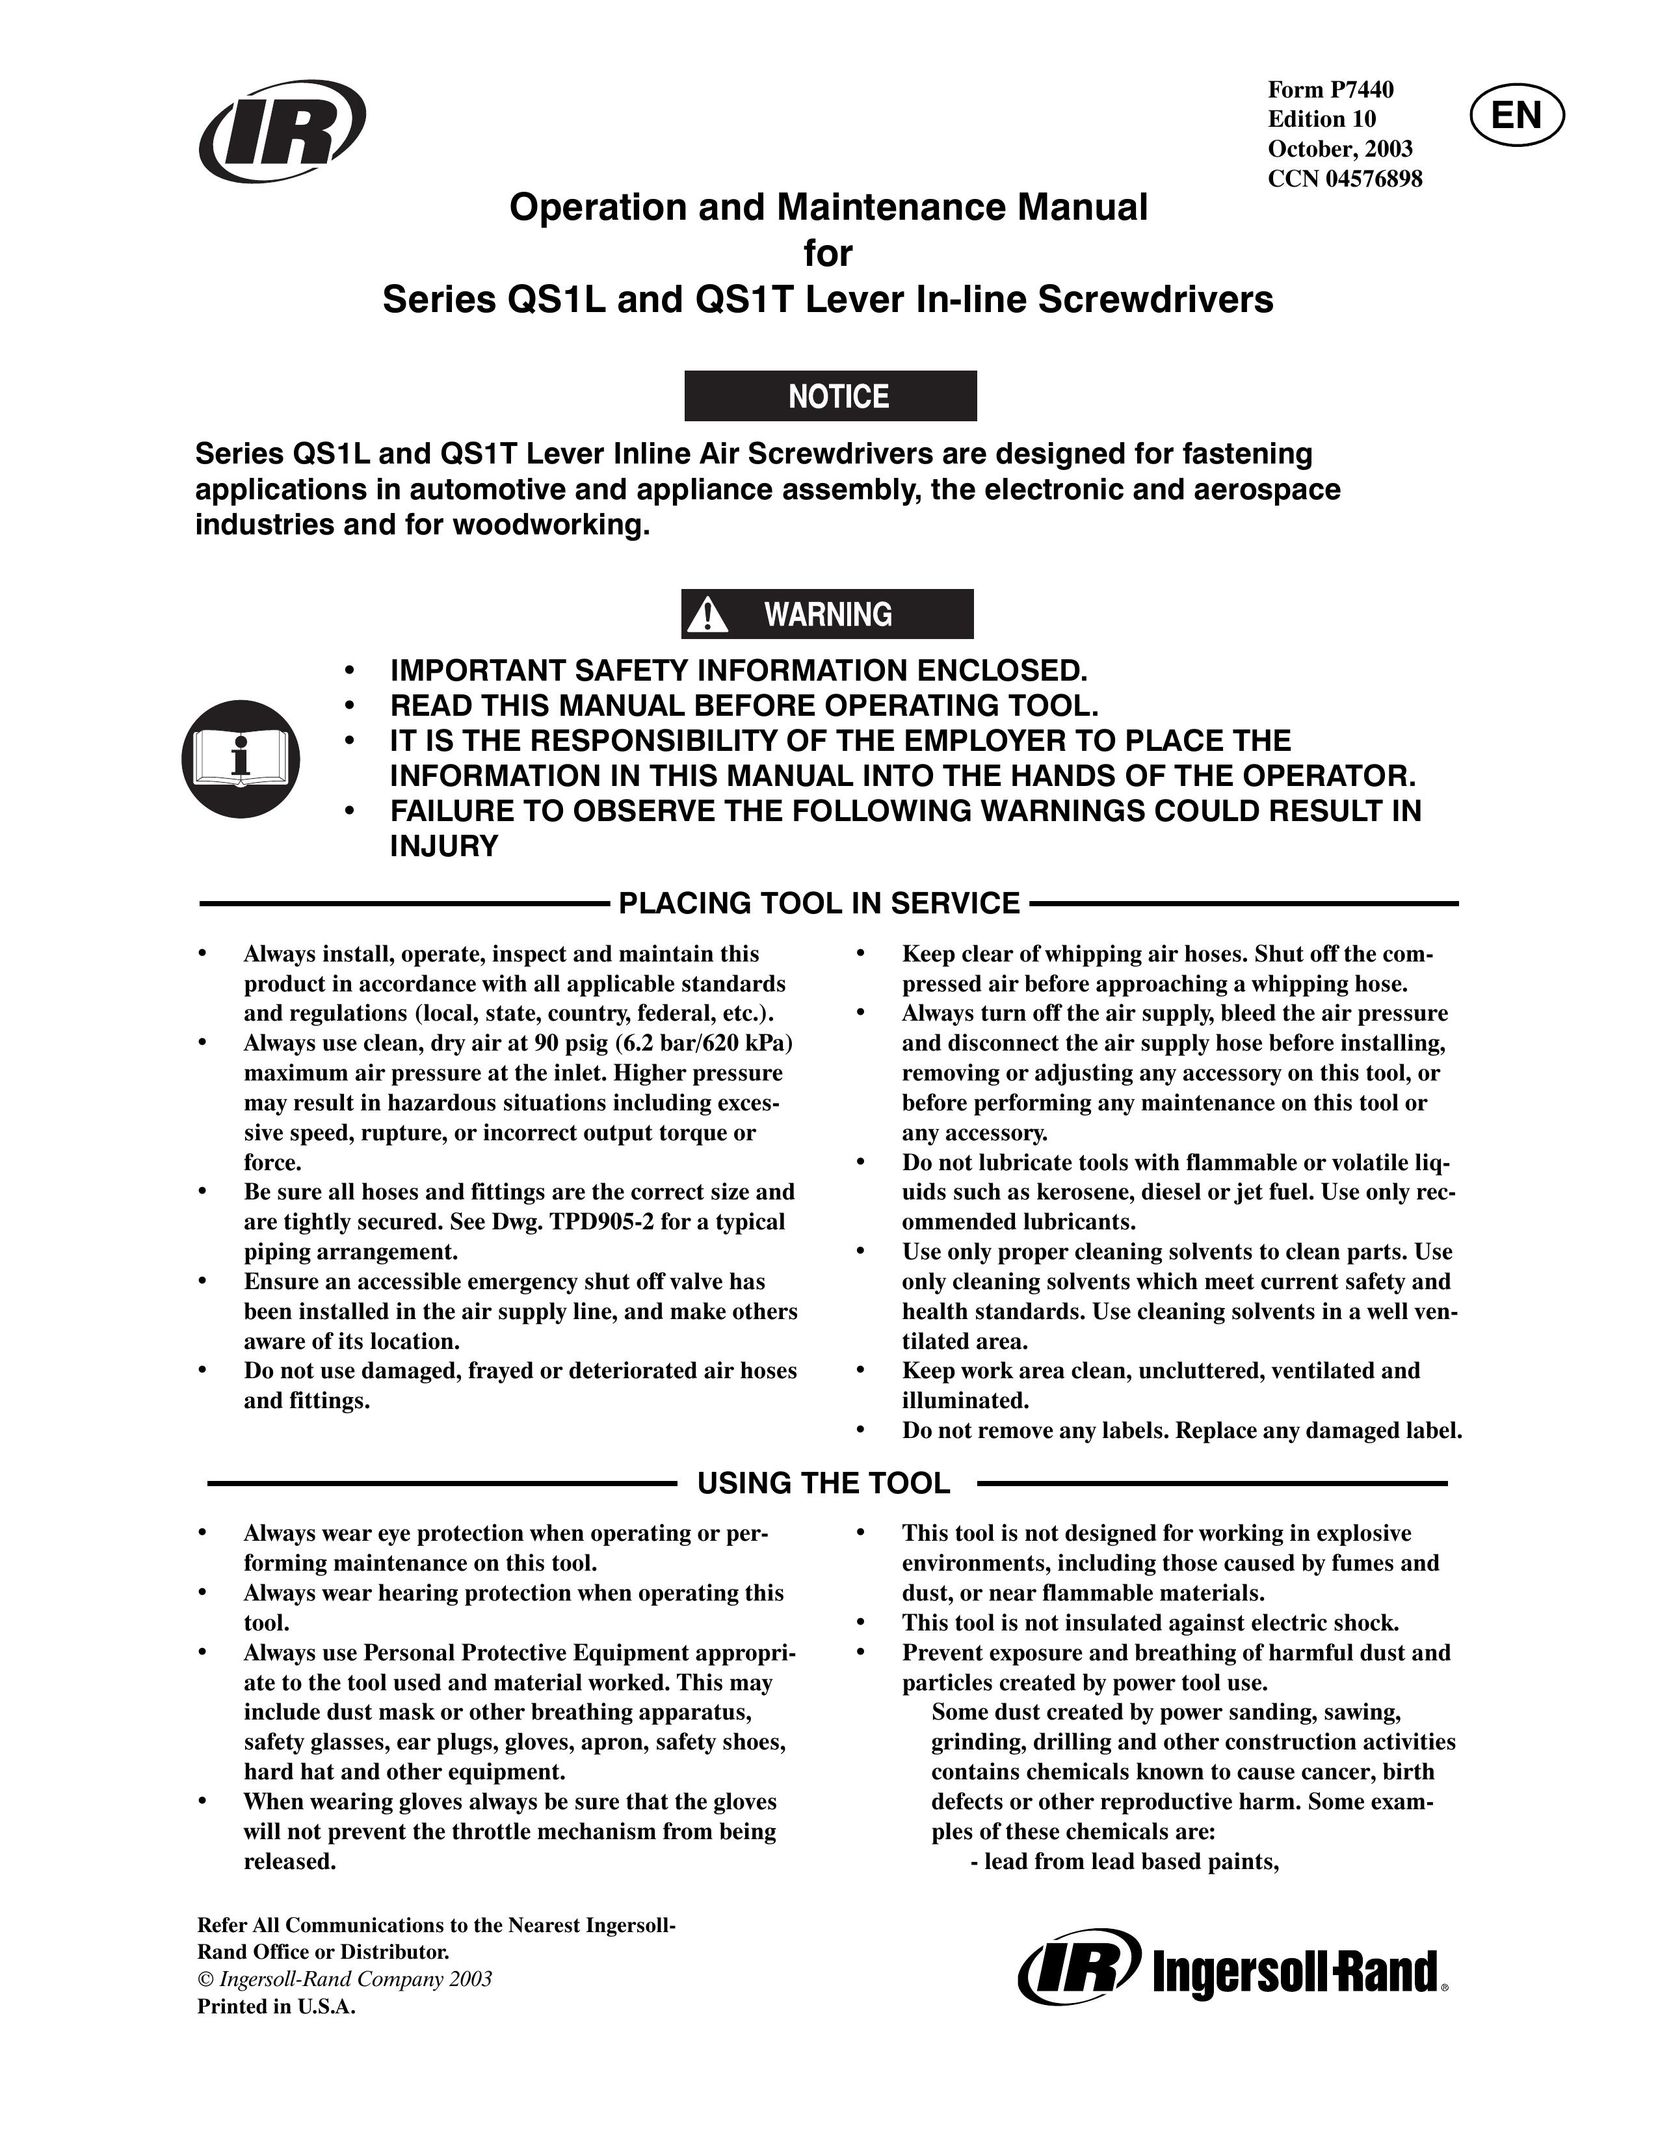 Ingersoll-Rand QS1T Power Screwdriver User Manual